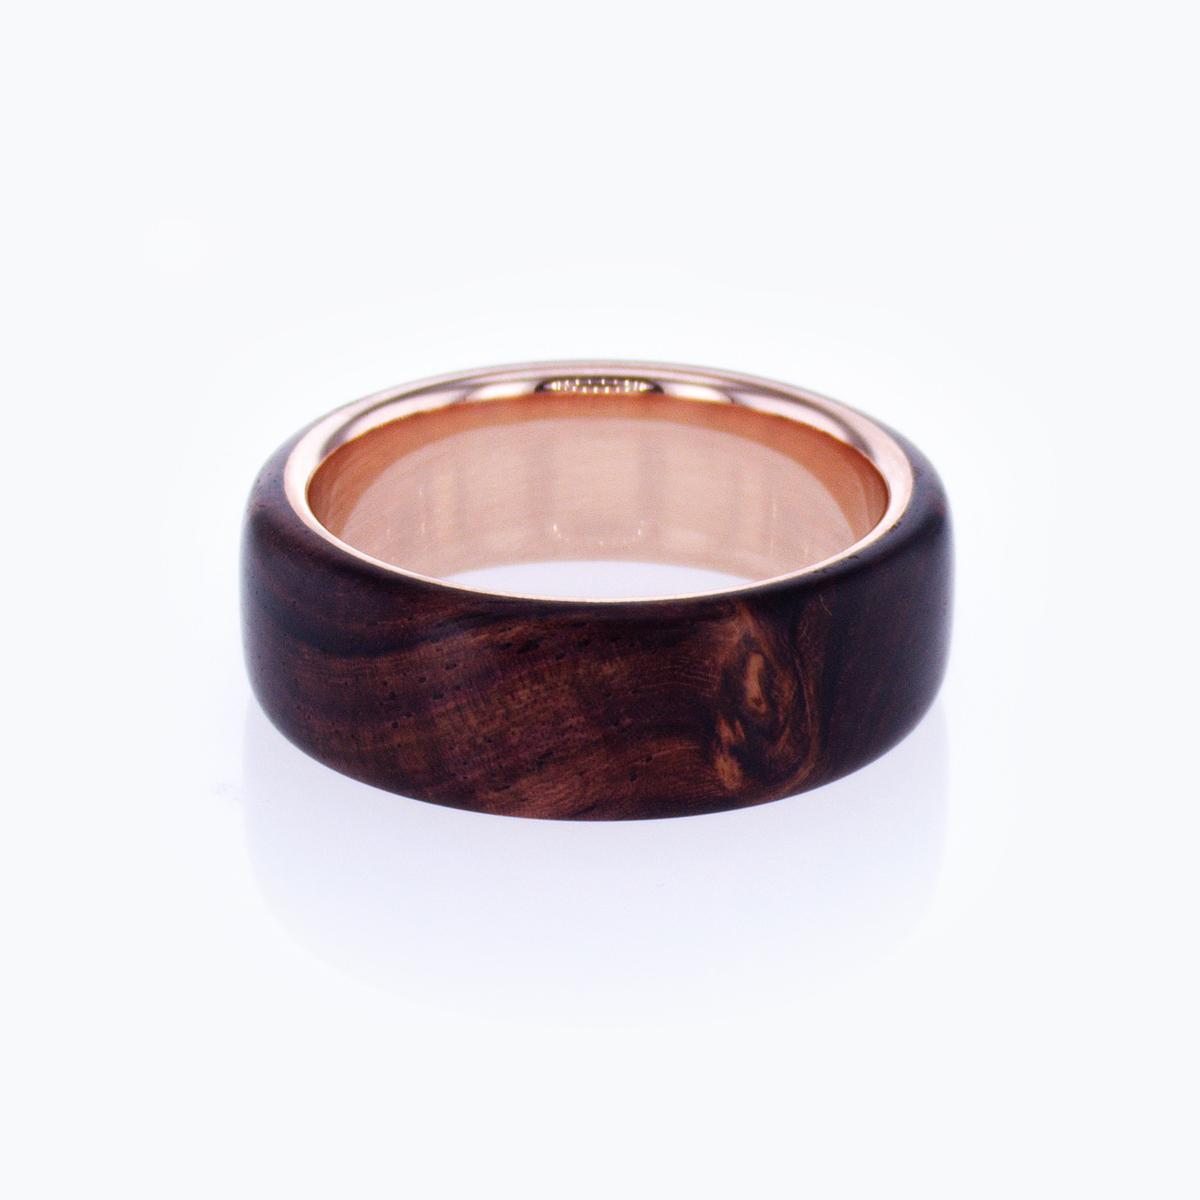 Burlwood Men's Wedding Ring with 14k Rose Gold Base